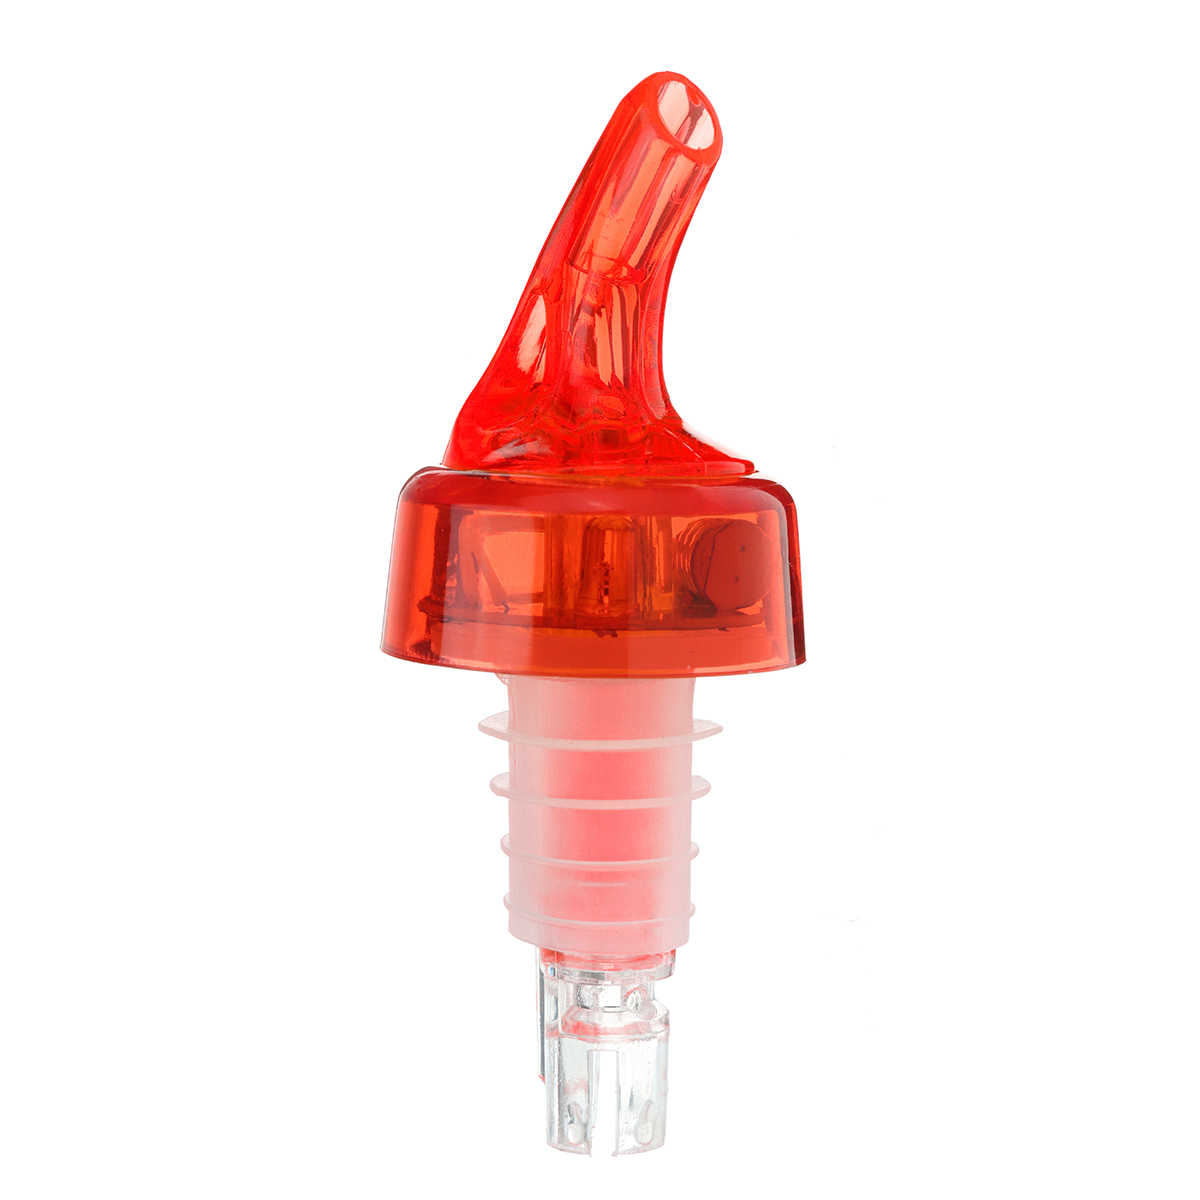 Spout-Bottle-Bar-Beverage-Dispenser-Quick-Shot-Spirit-Nip-Tool-Home-Illuminated-LED-Colorful-Pourer-1442647-5